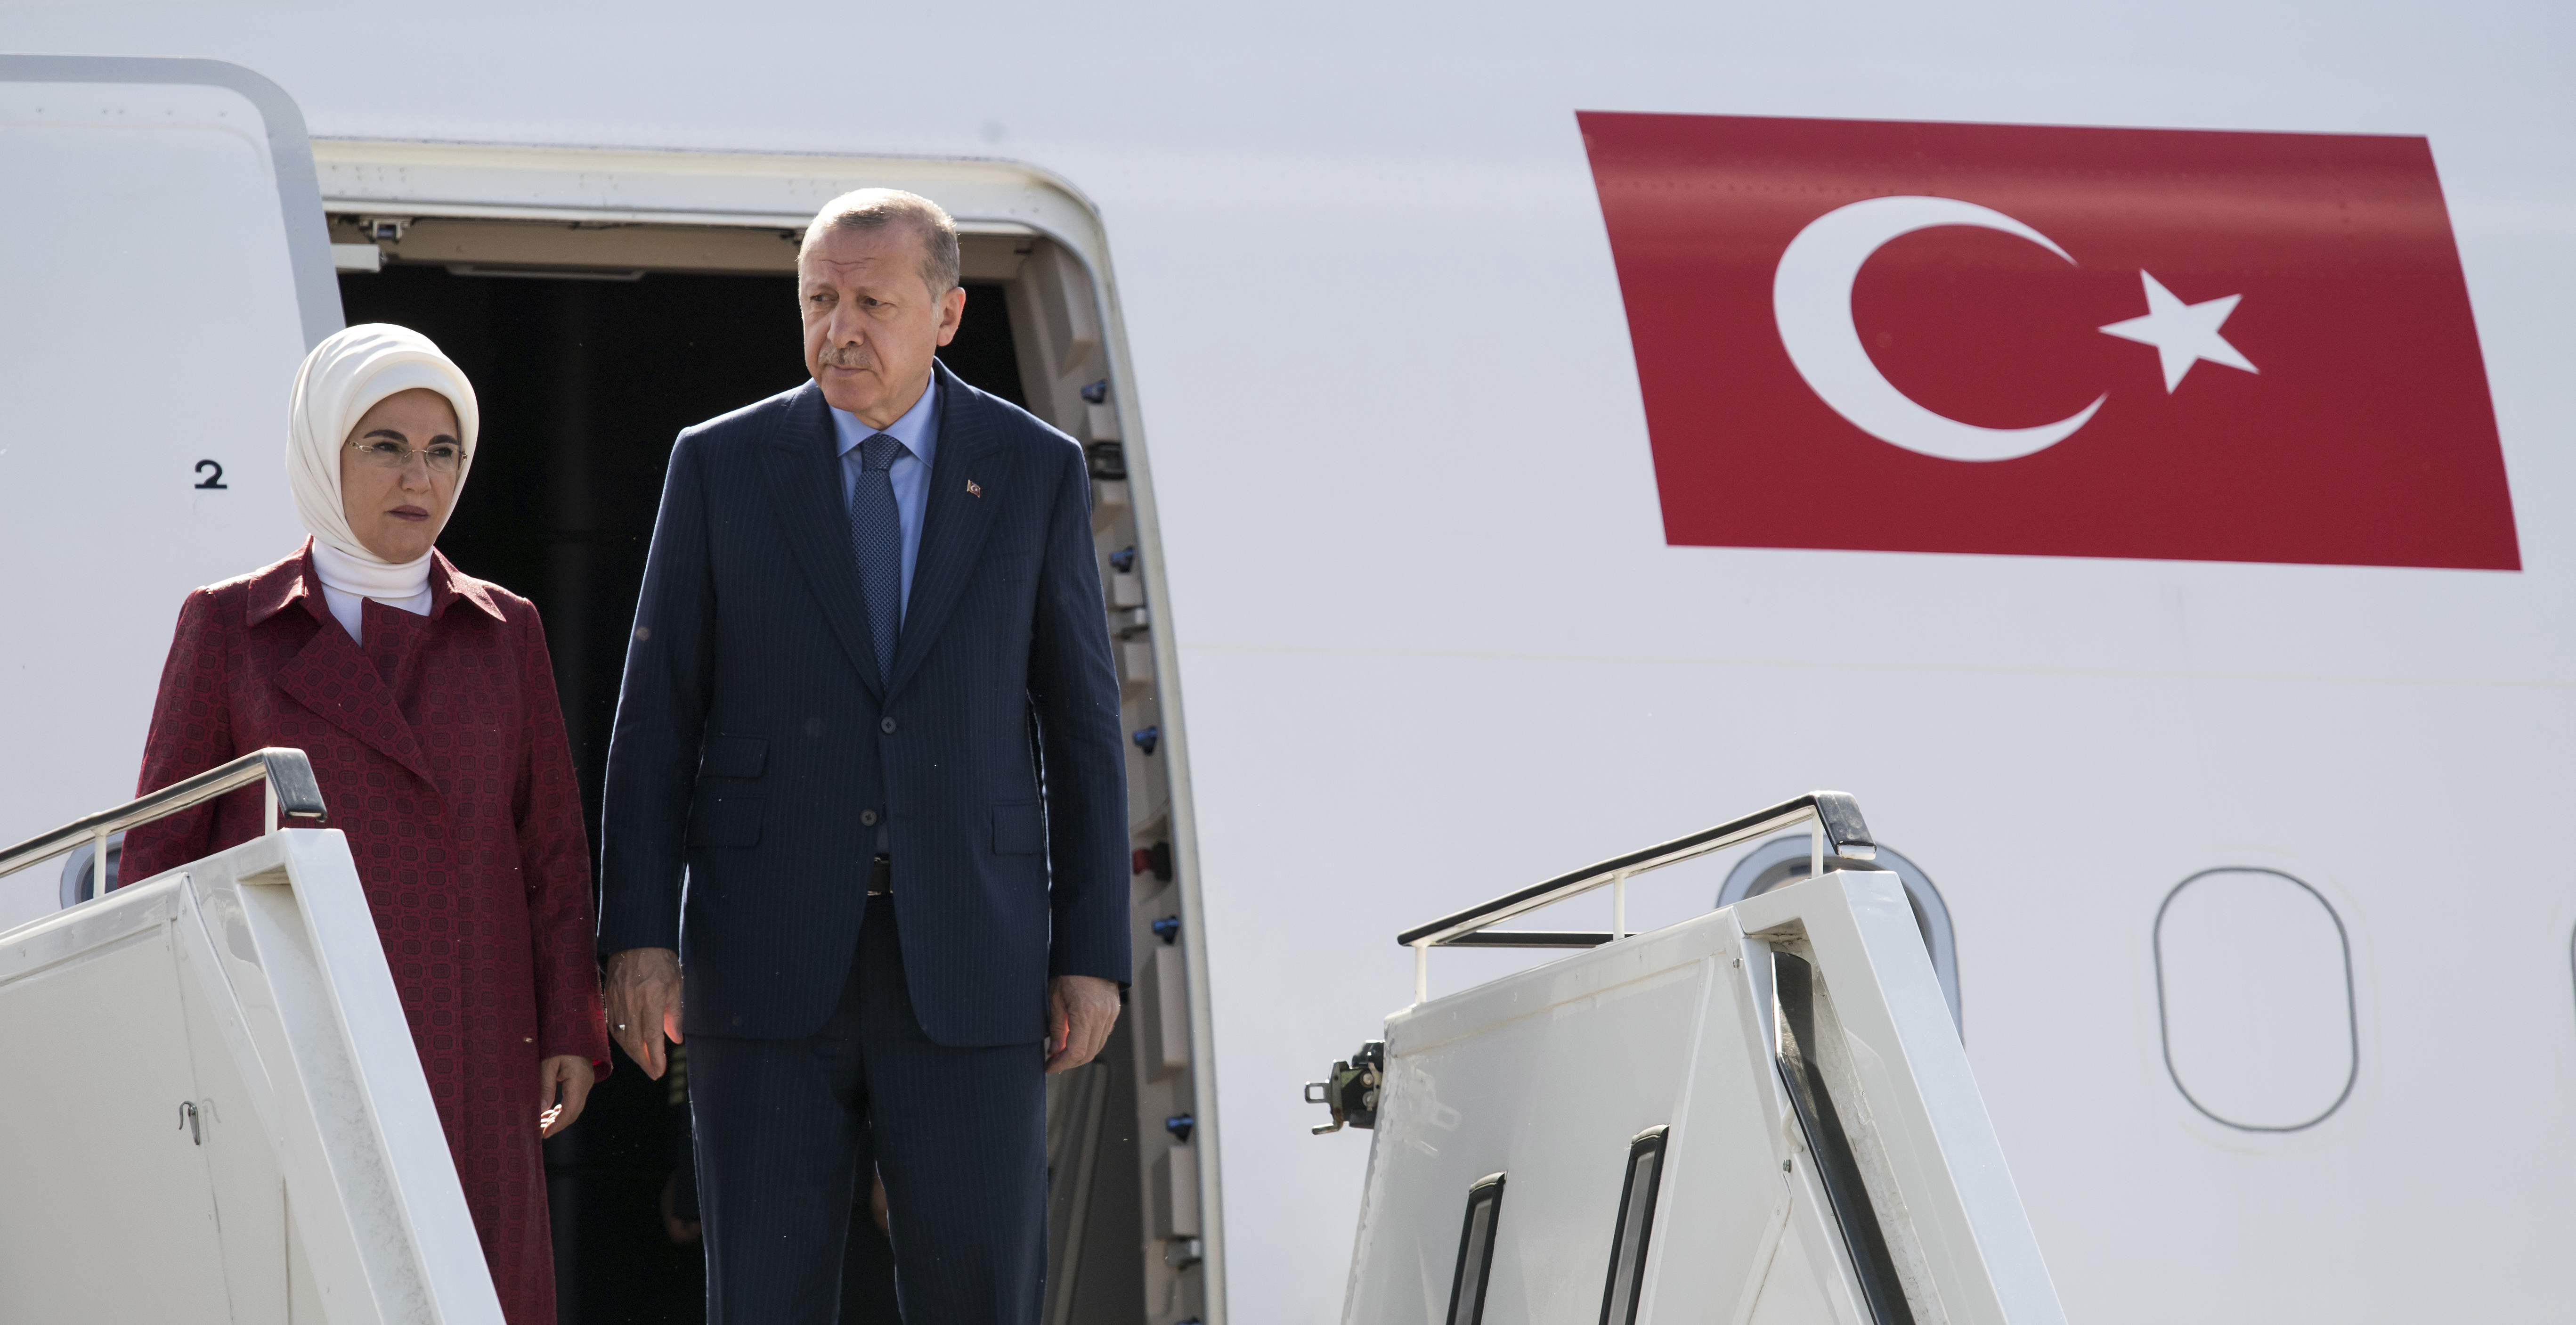 Turkey's president Recep Tayyip Erdogan and his wife Emine arrive in Germany